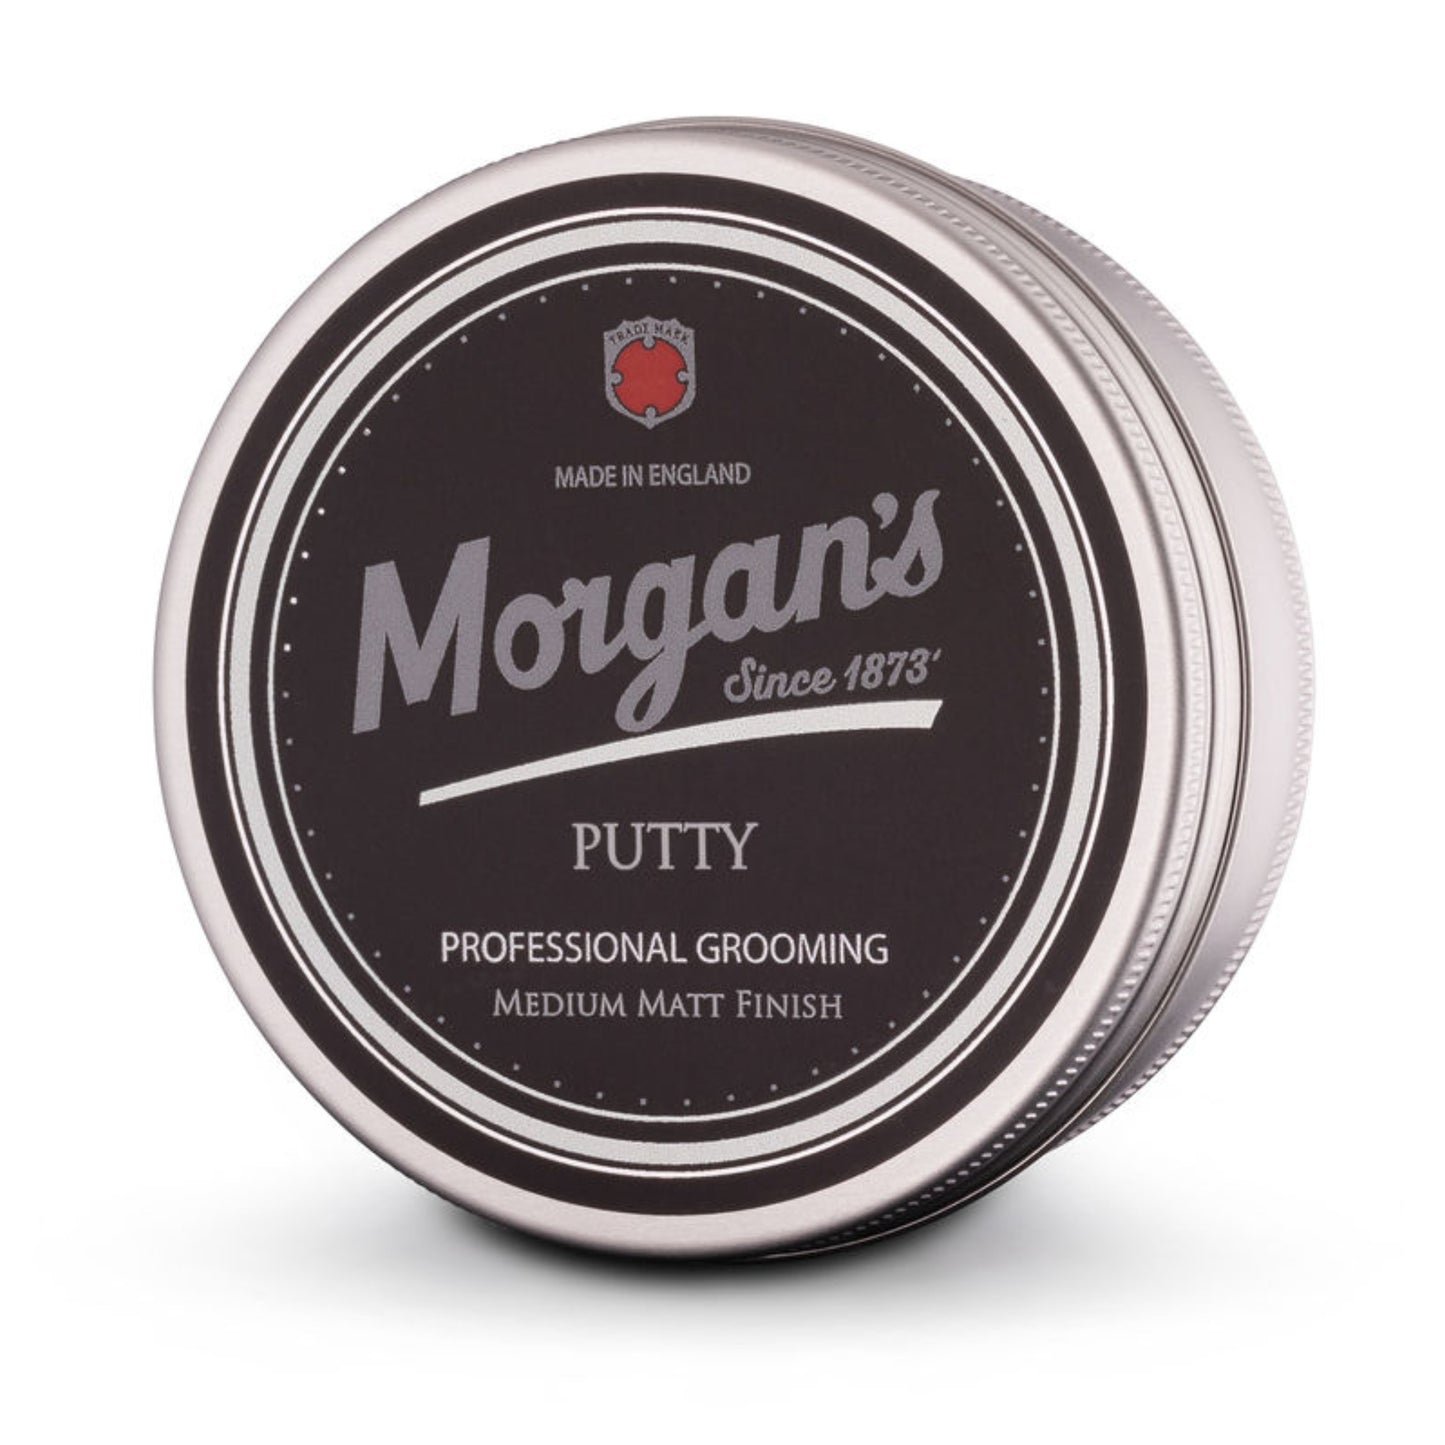 Morgan's Putty